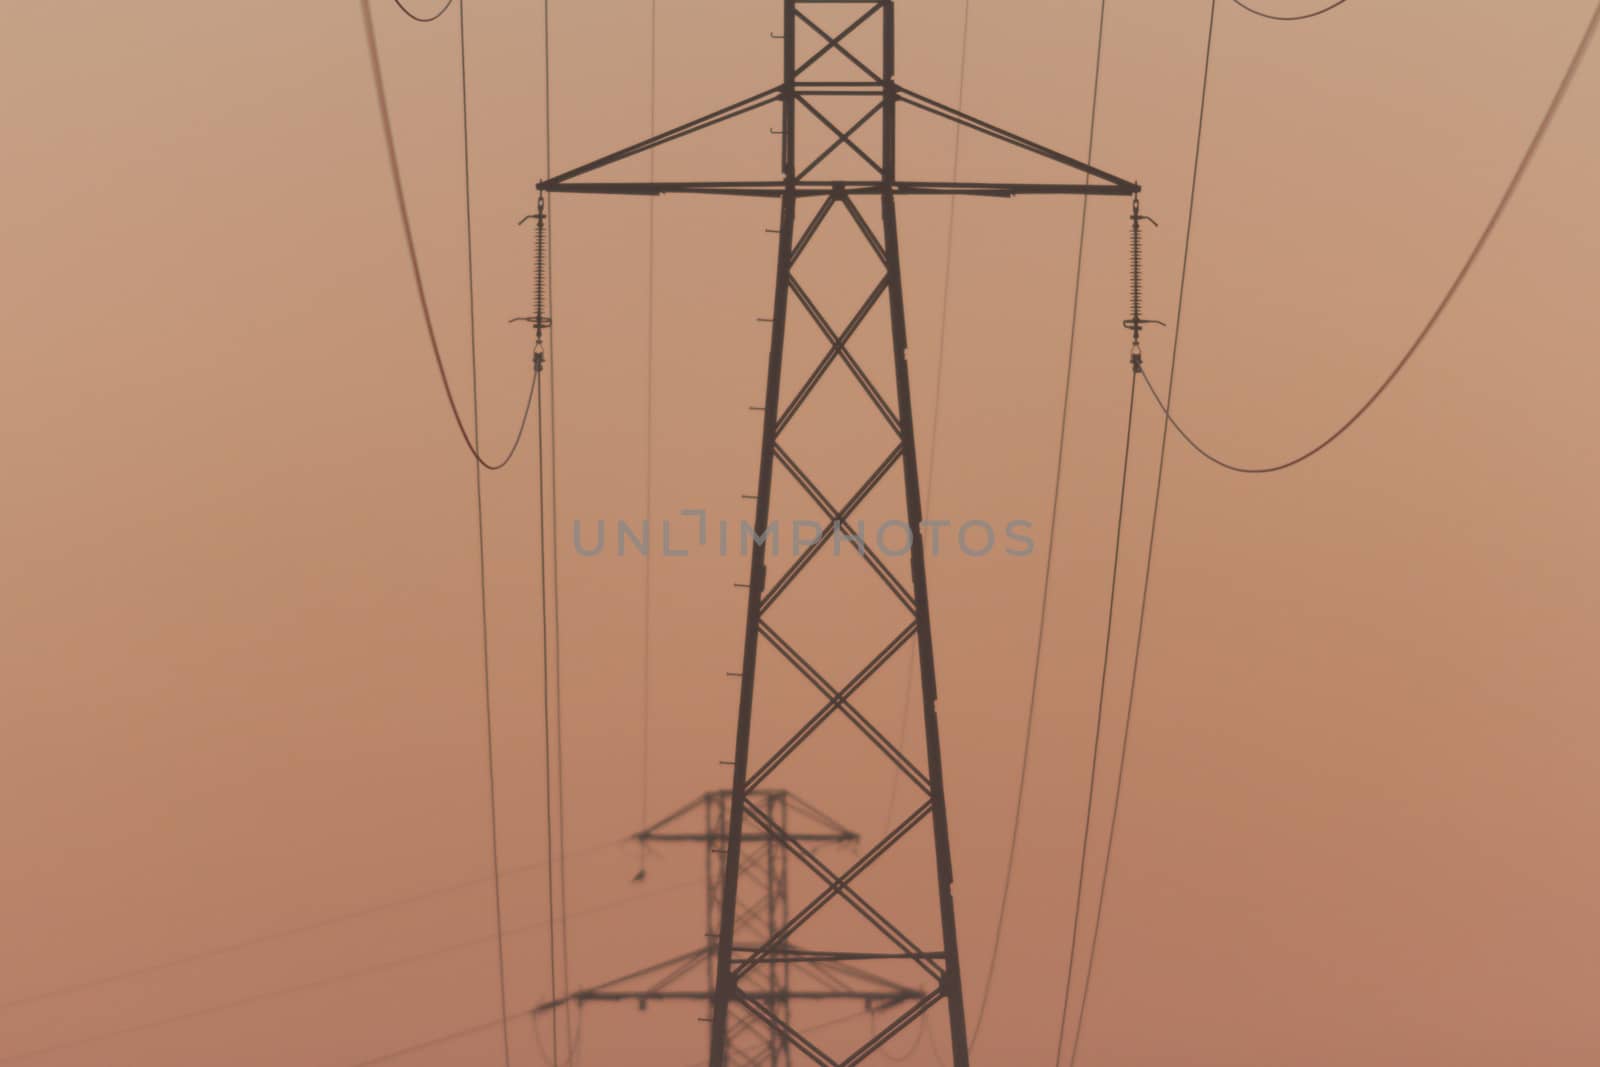 power line transmission, industrial sereis